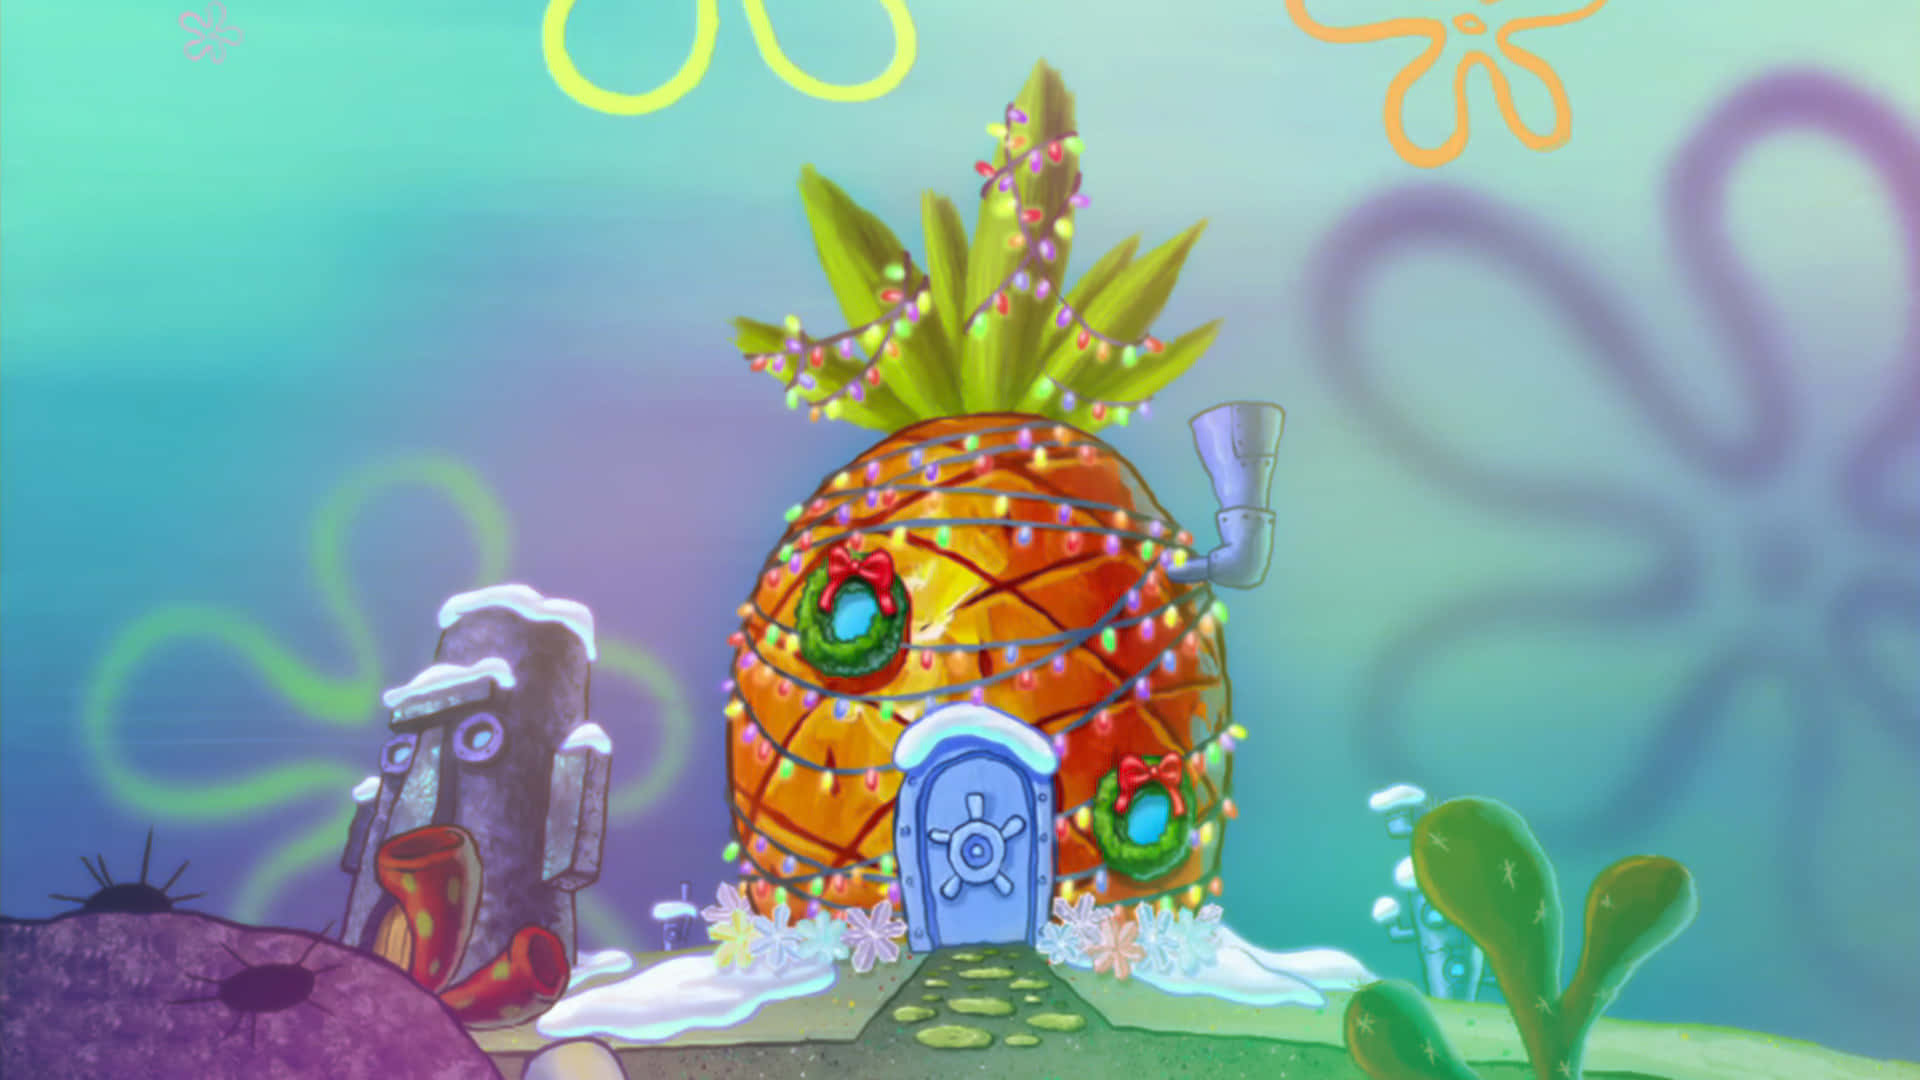 Download Take a look inside Spongebob's pineapple home! Wallpaper